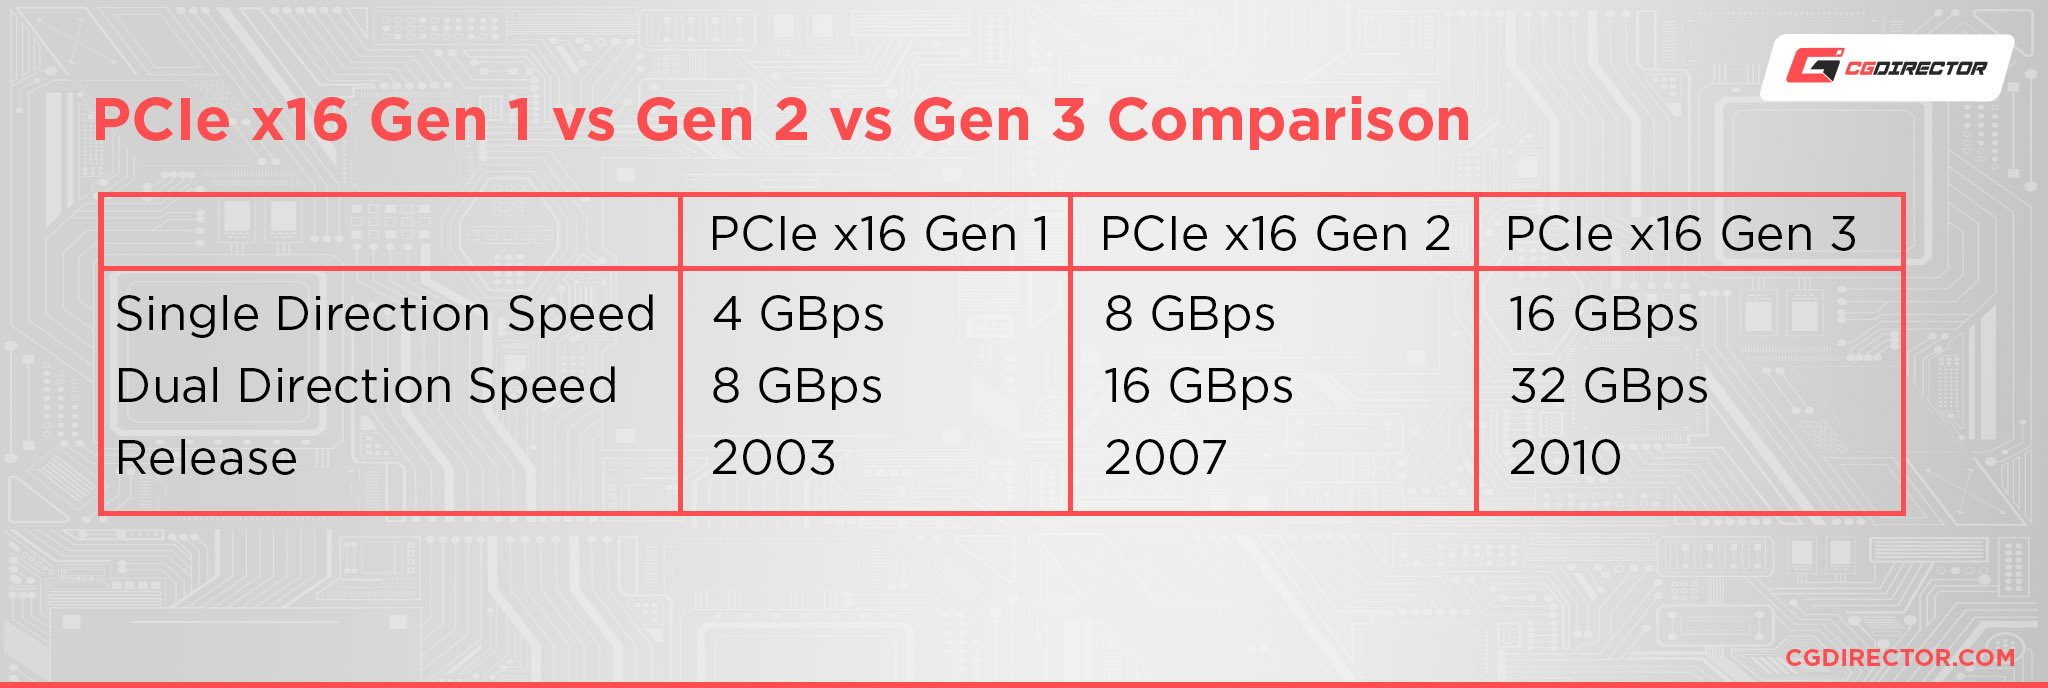 PCIe x16 Gen 1 vs Gen 2 vs Gen 3 Comparison